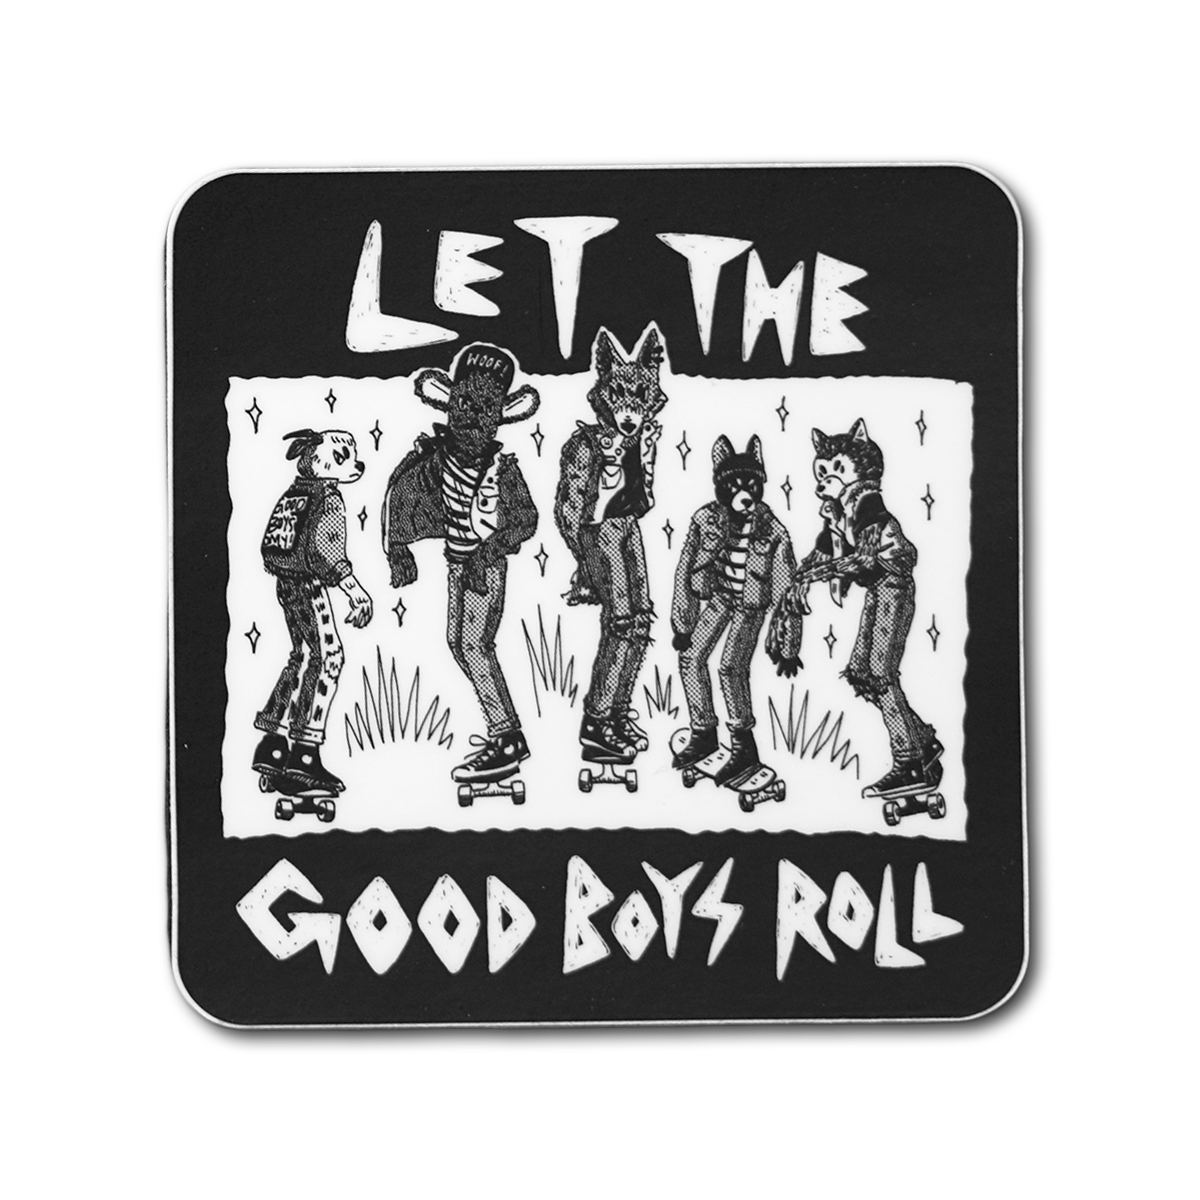 Let The Good Boys Roll!